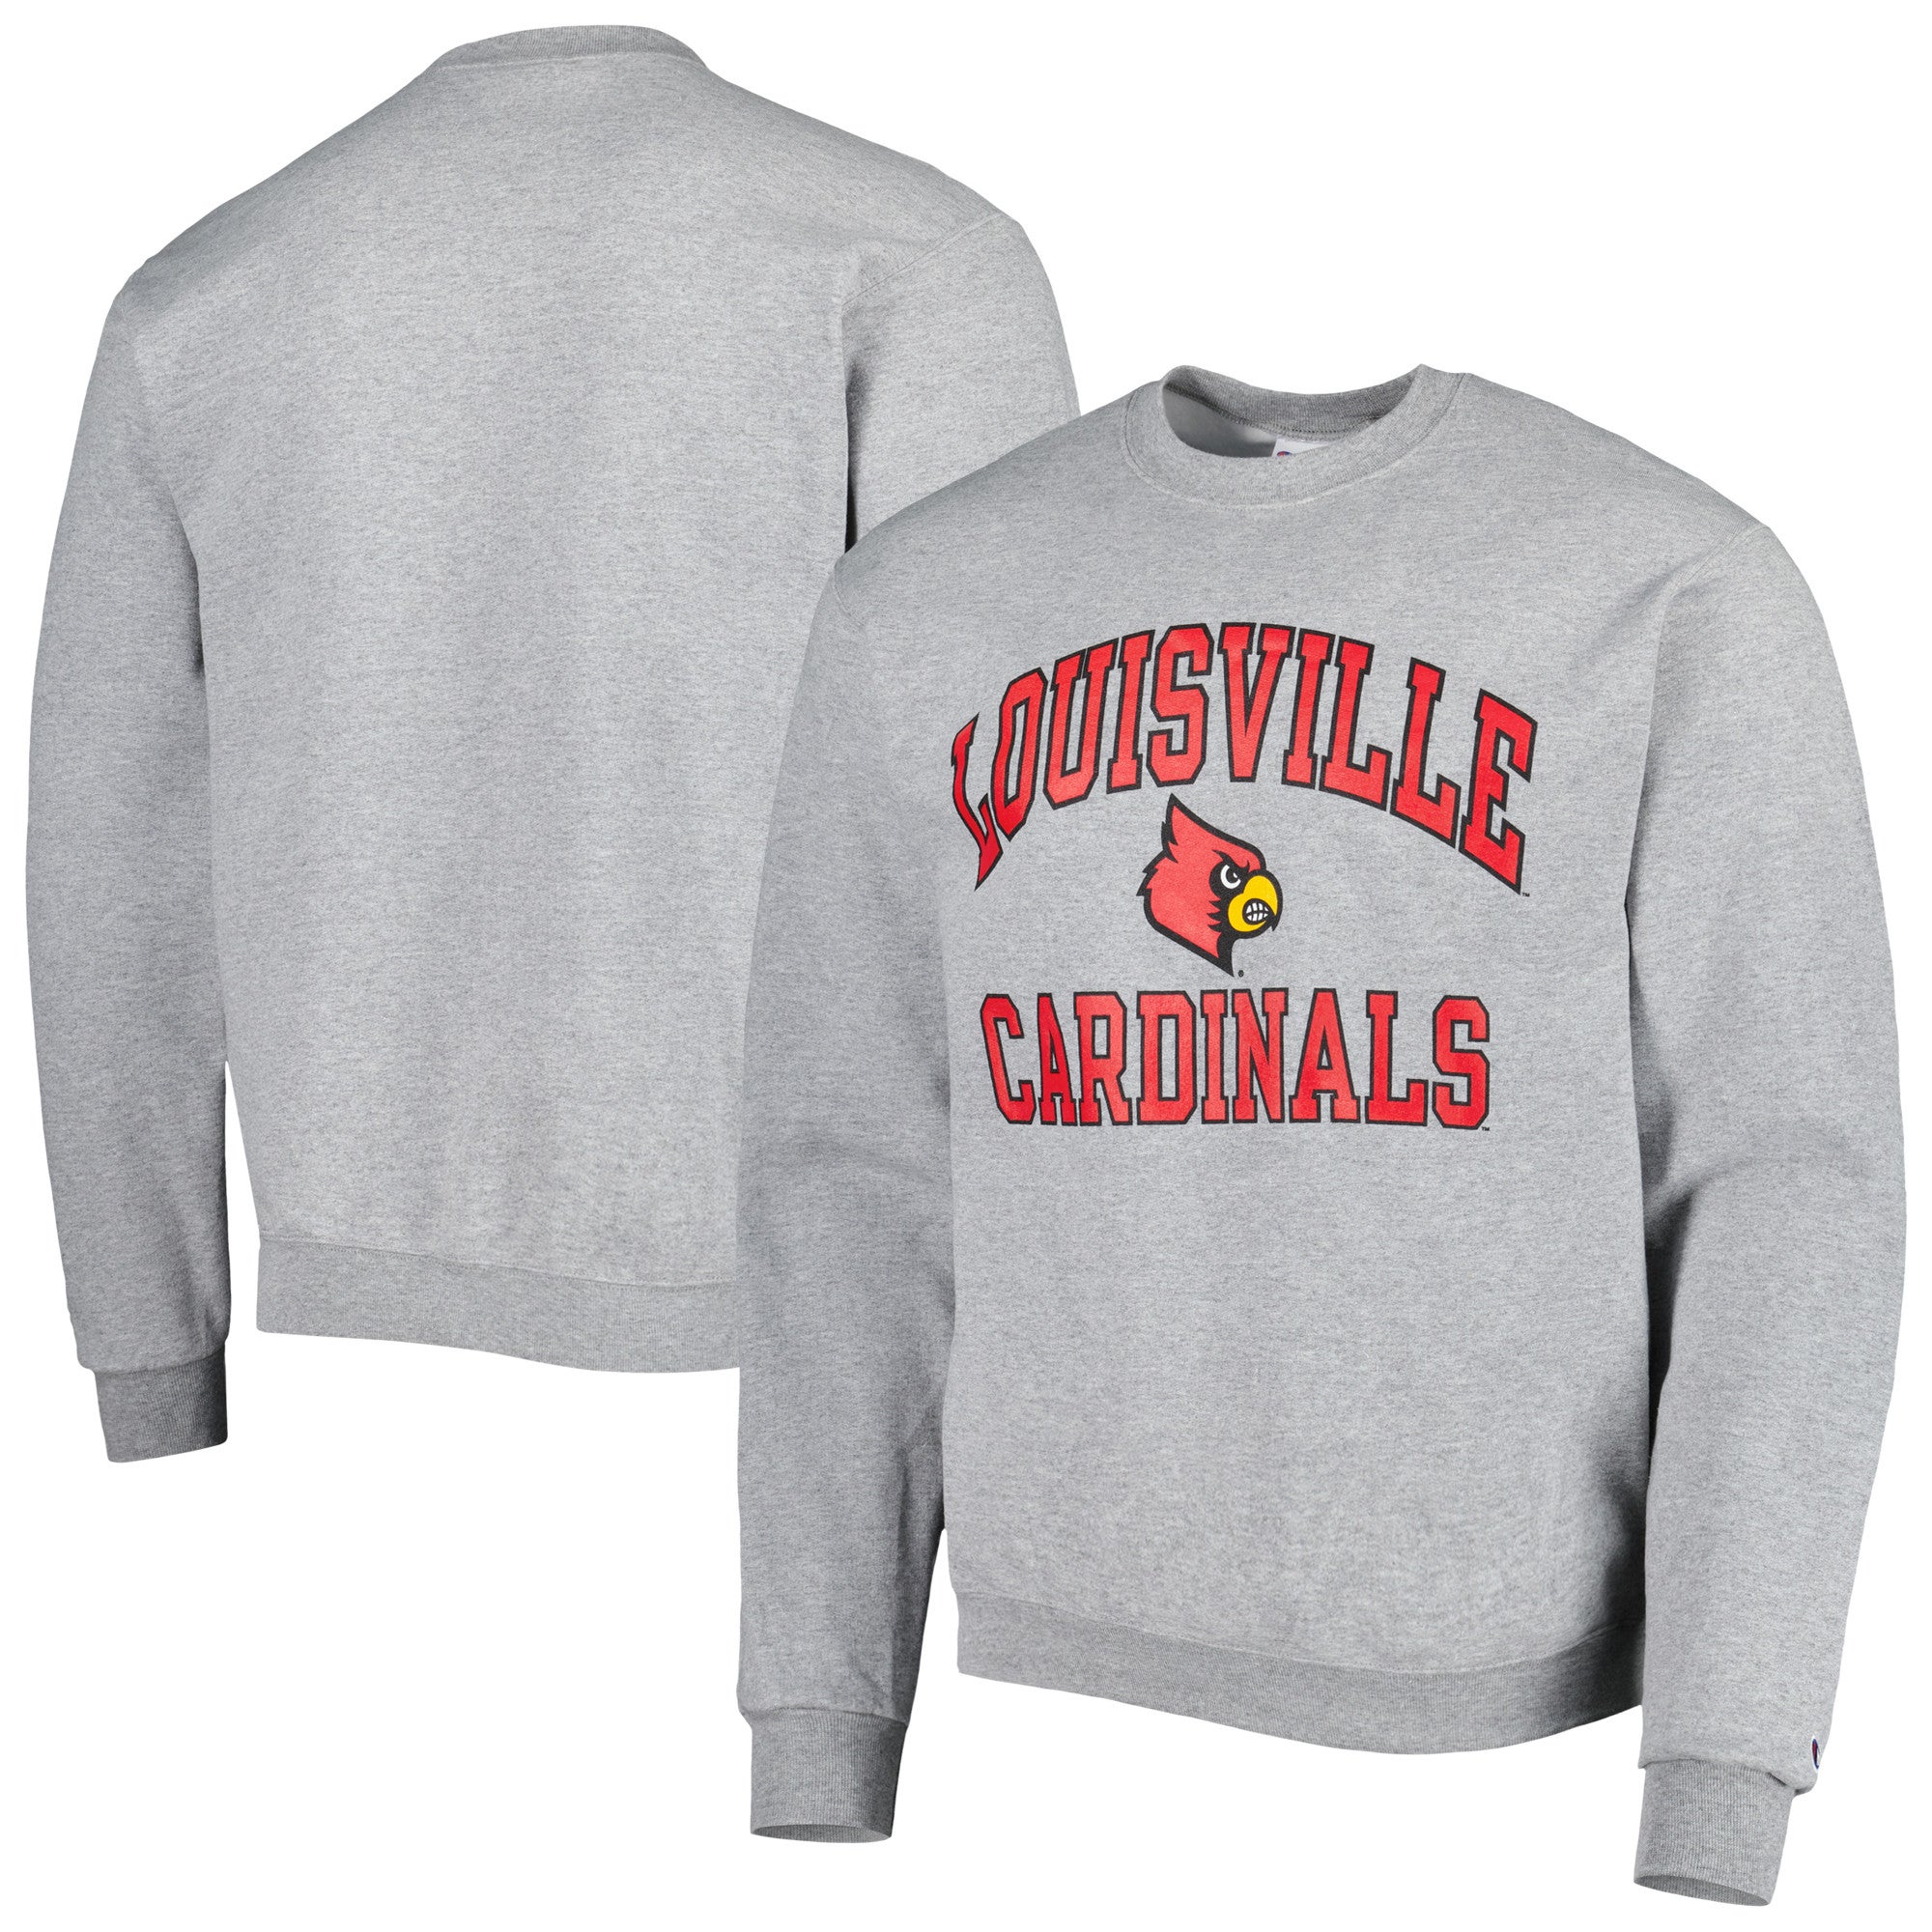 Men's Champion Red Louisville Cardinals High Motor Pullover Sweatshirt Size: Medium